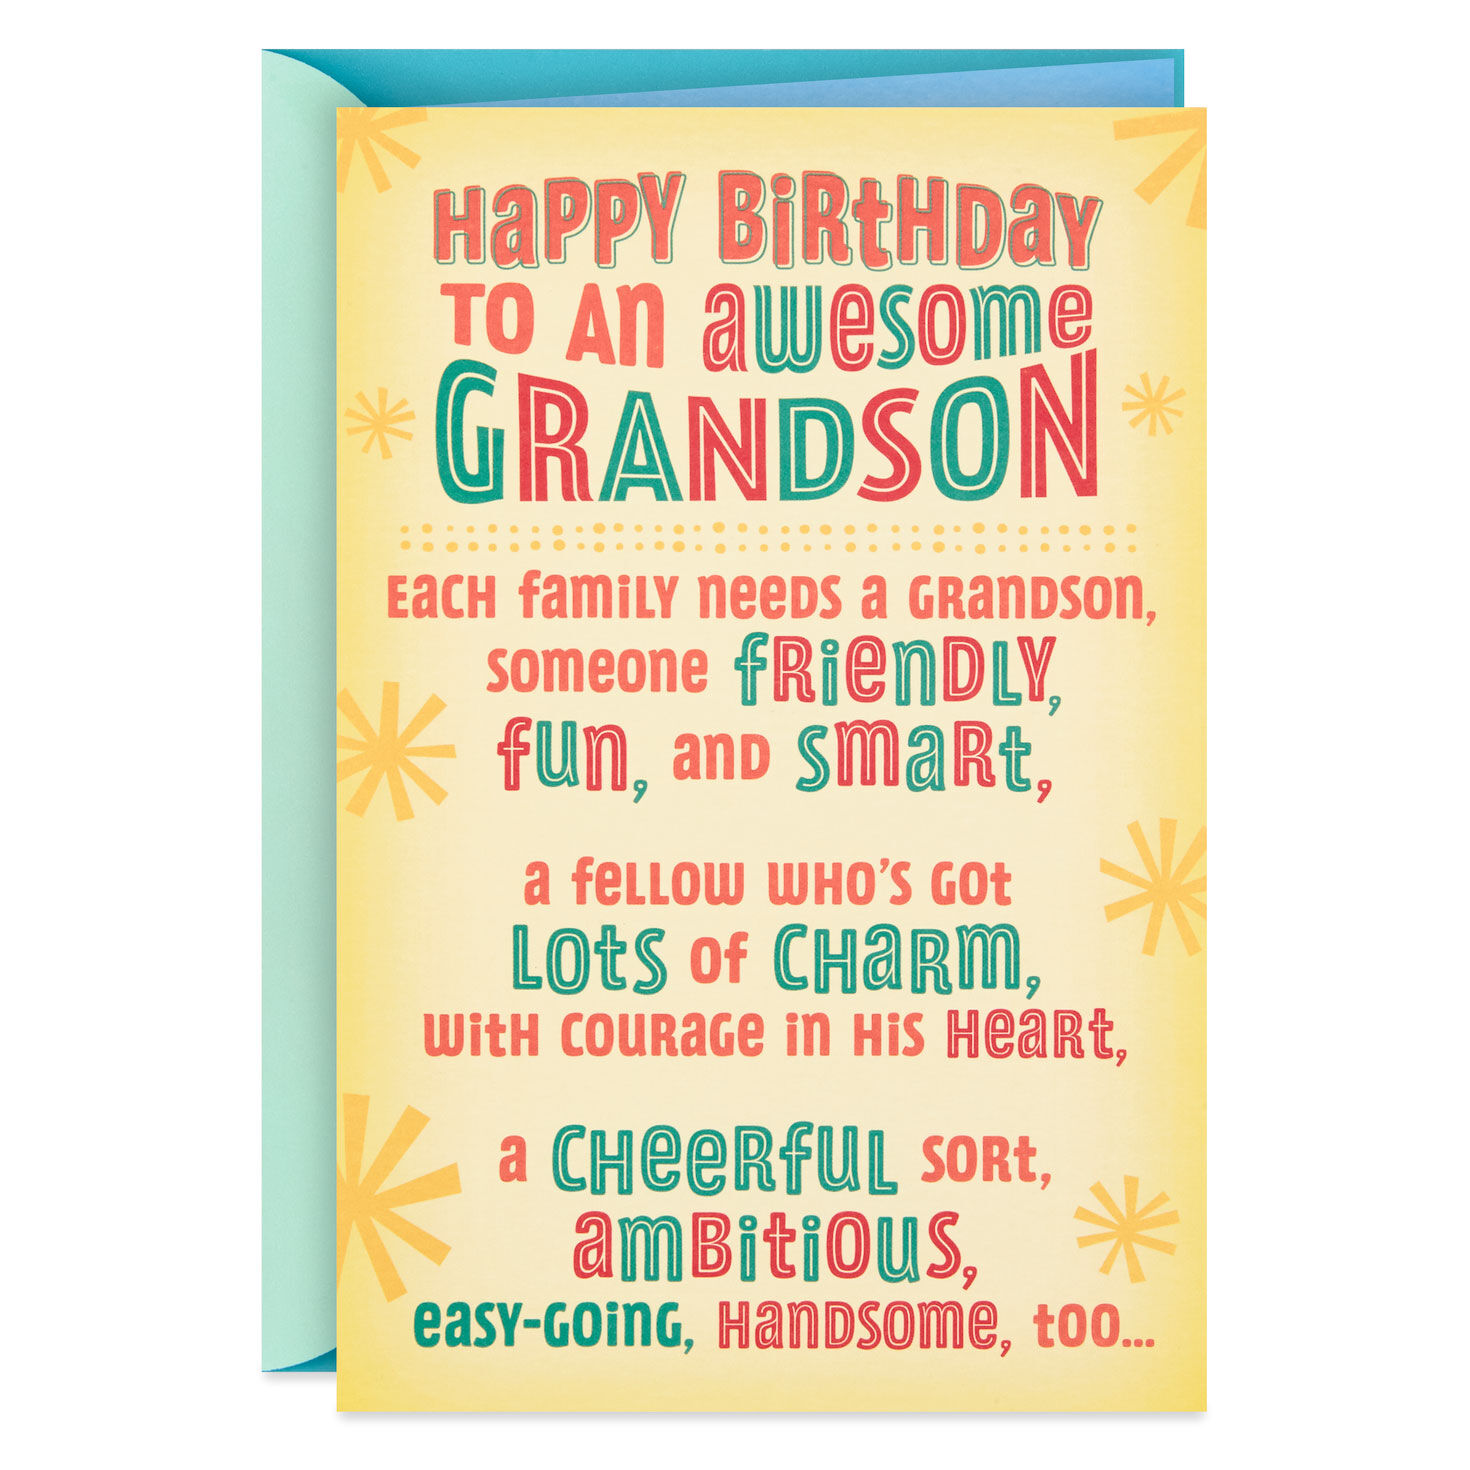 grandson-birthday-card